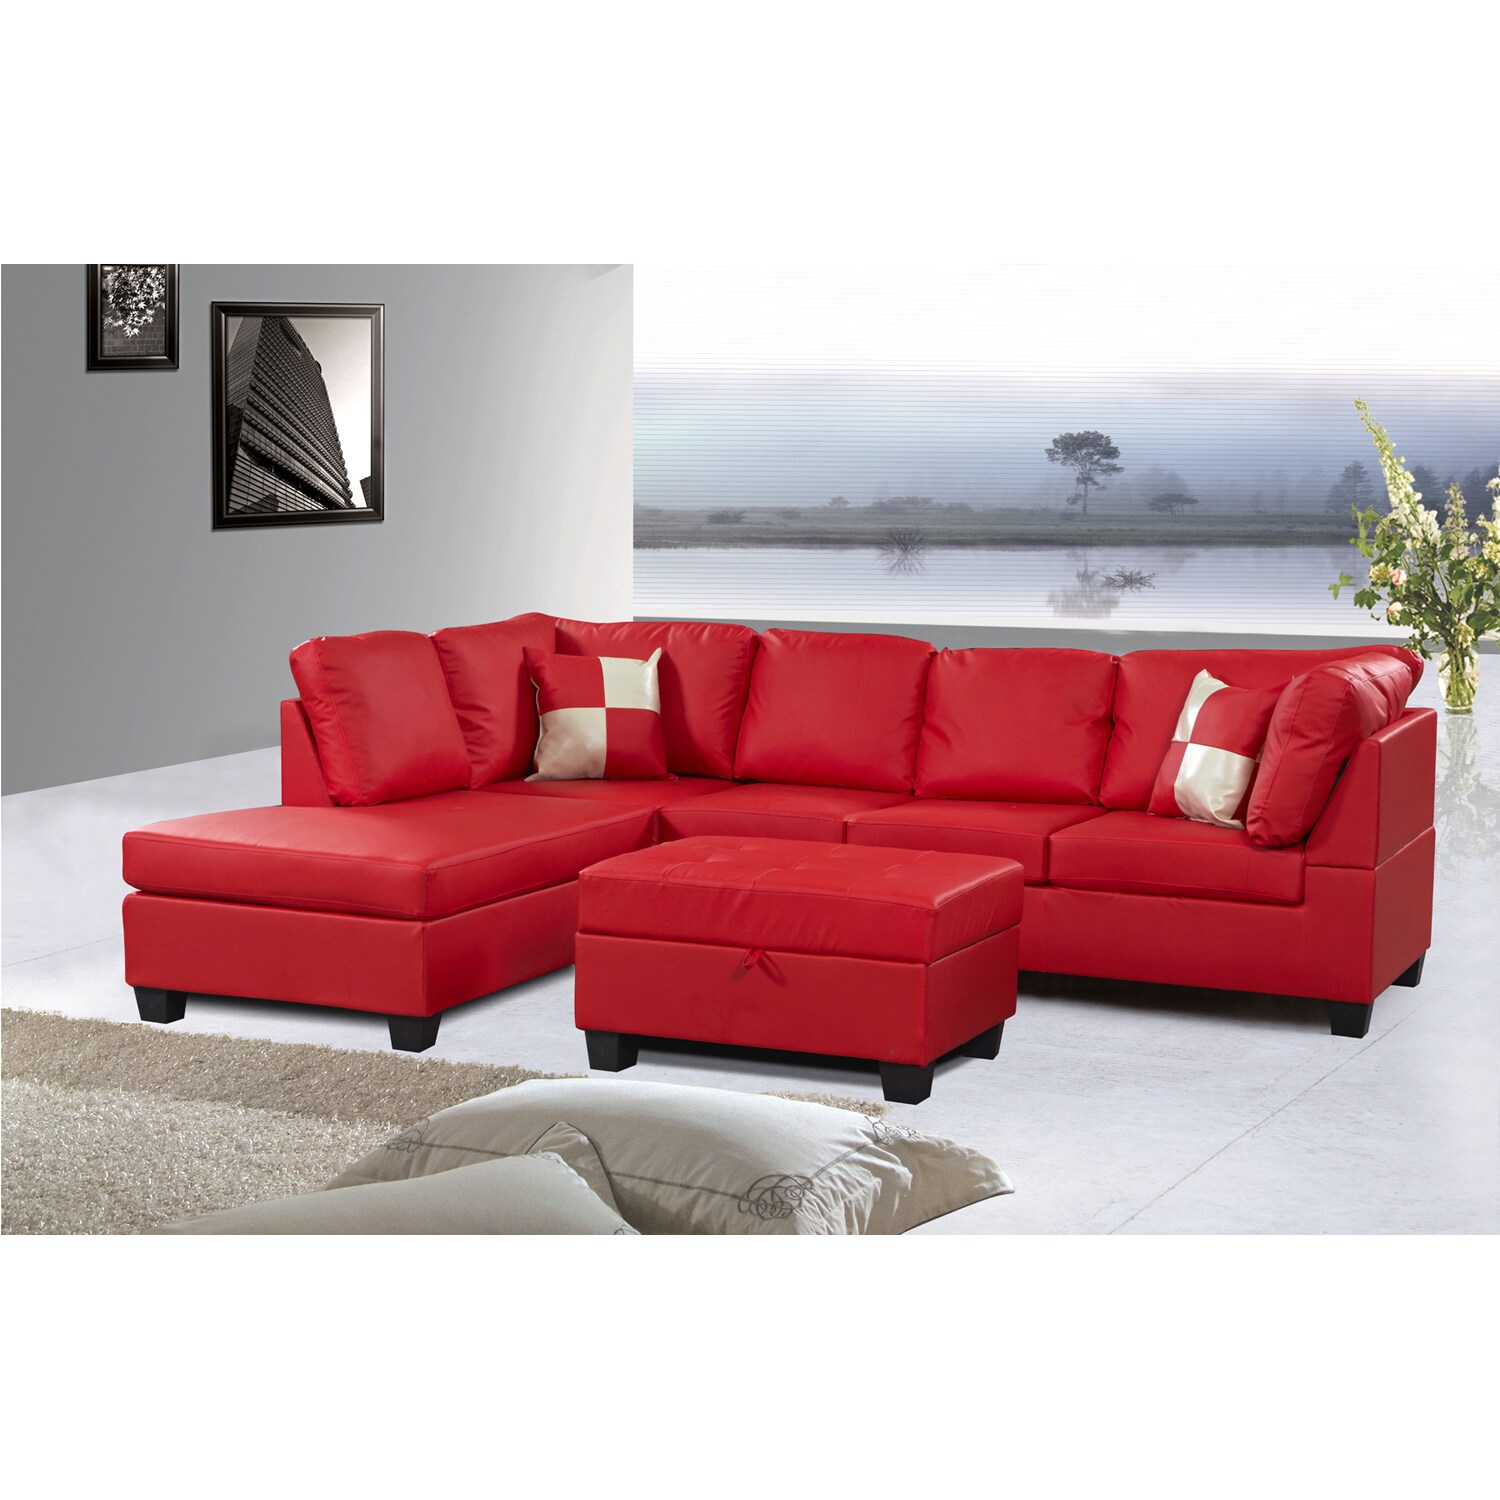 Jingo Faux Leather Orange red 3 piece Sectional Sofa Set